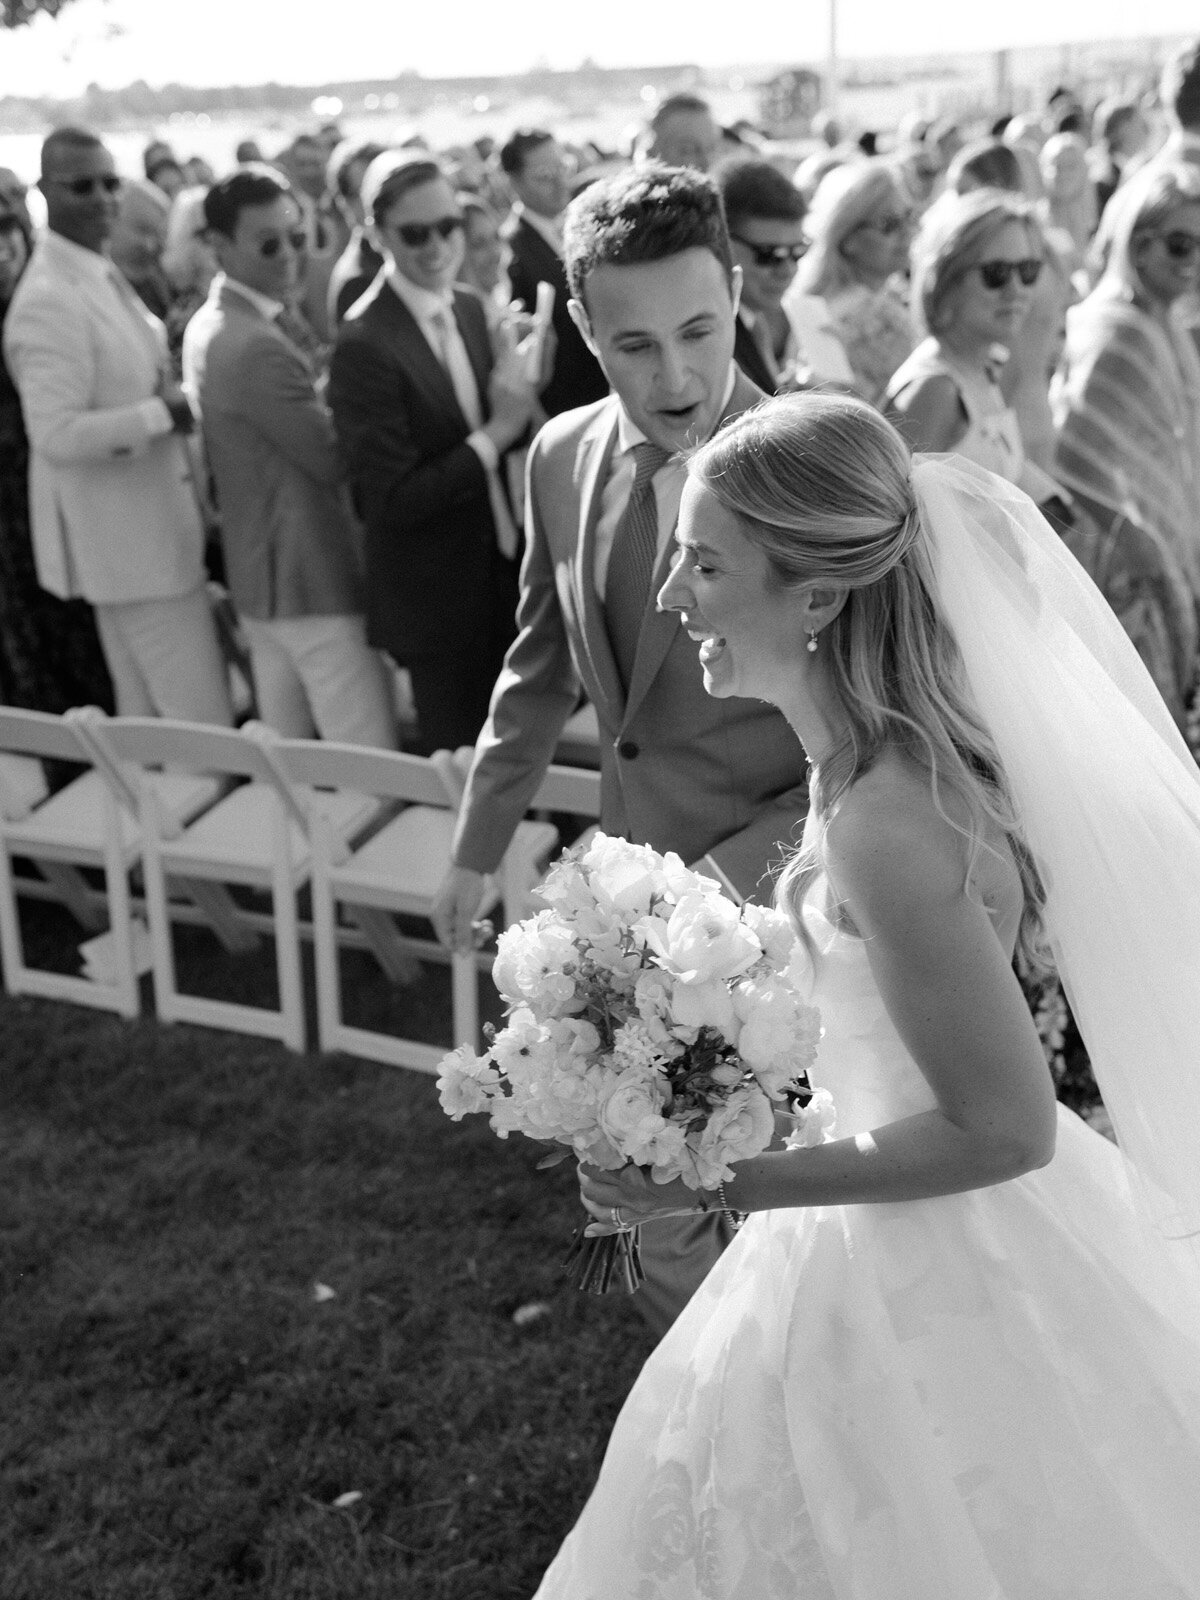 Kate-Murtaugh-Events-bride-and-groom-portrait-ceremony